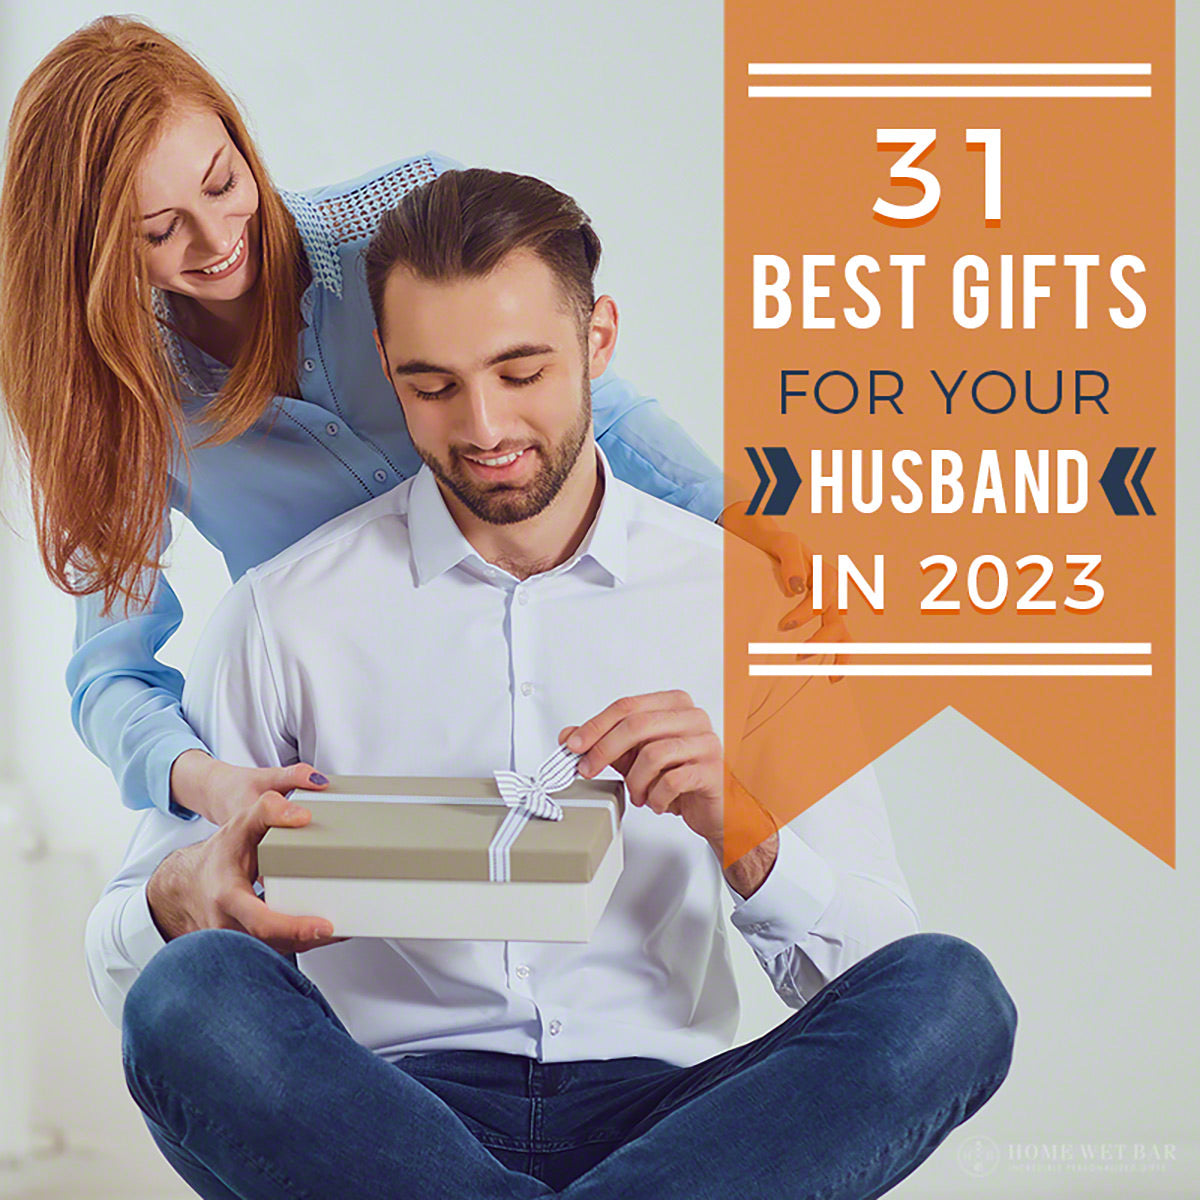 10 Best Gifts Ideas For Husband » CashKaro Blog